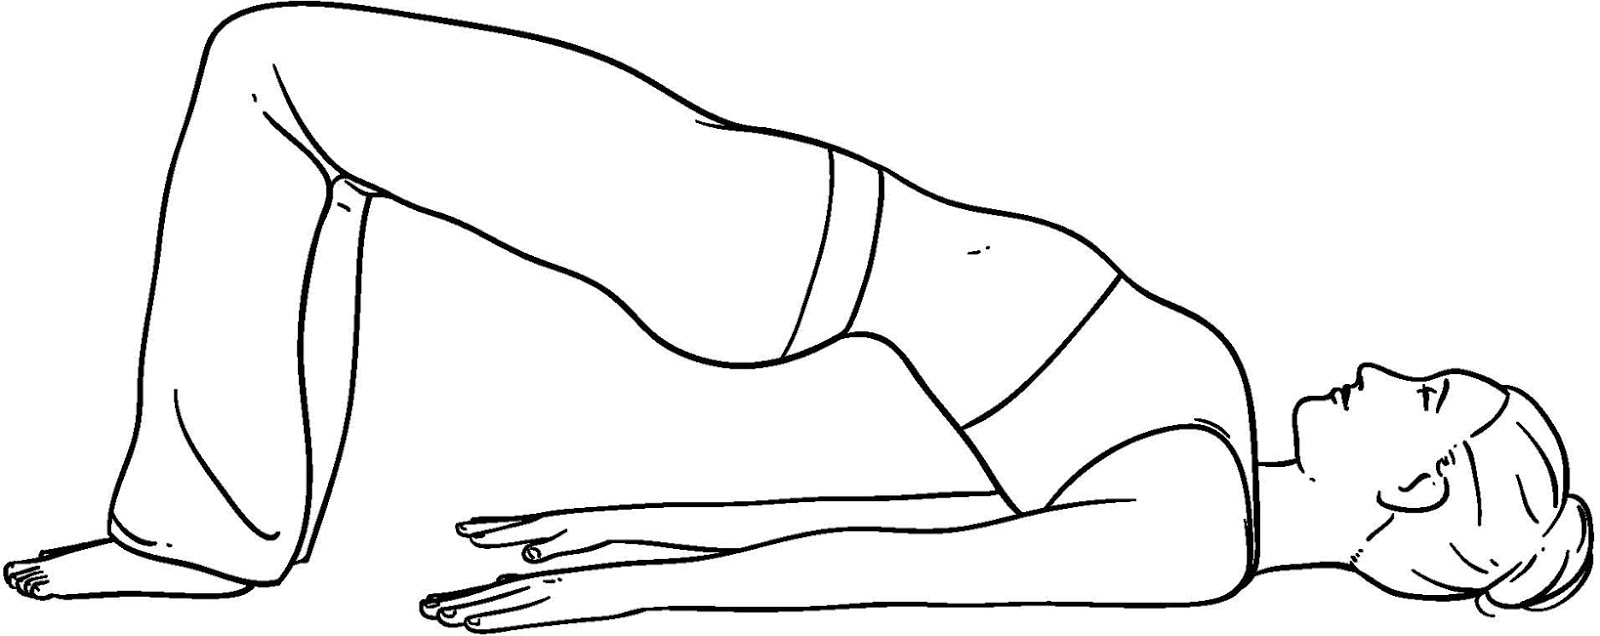 Namaste Bridge Pose Yoga Cartoon Logo Vector Illustration Stock  Illustration - Download Image Now - iStock